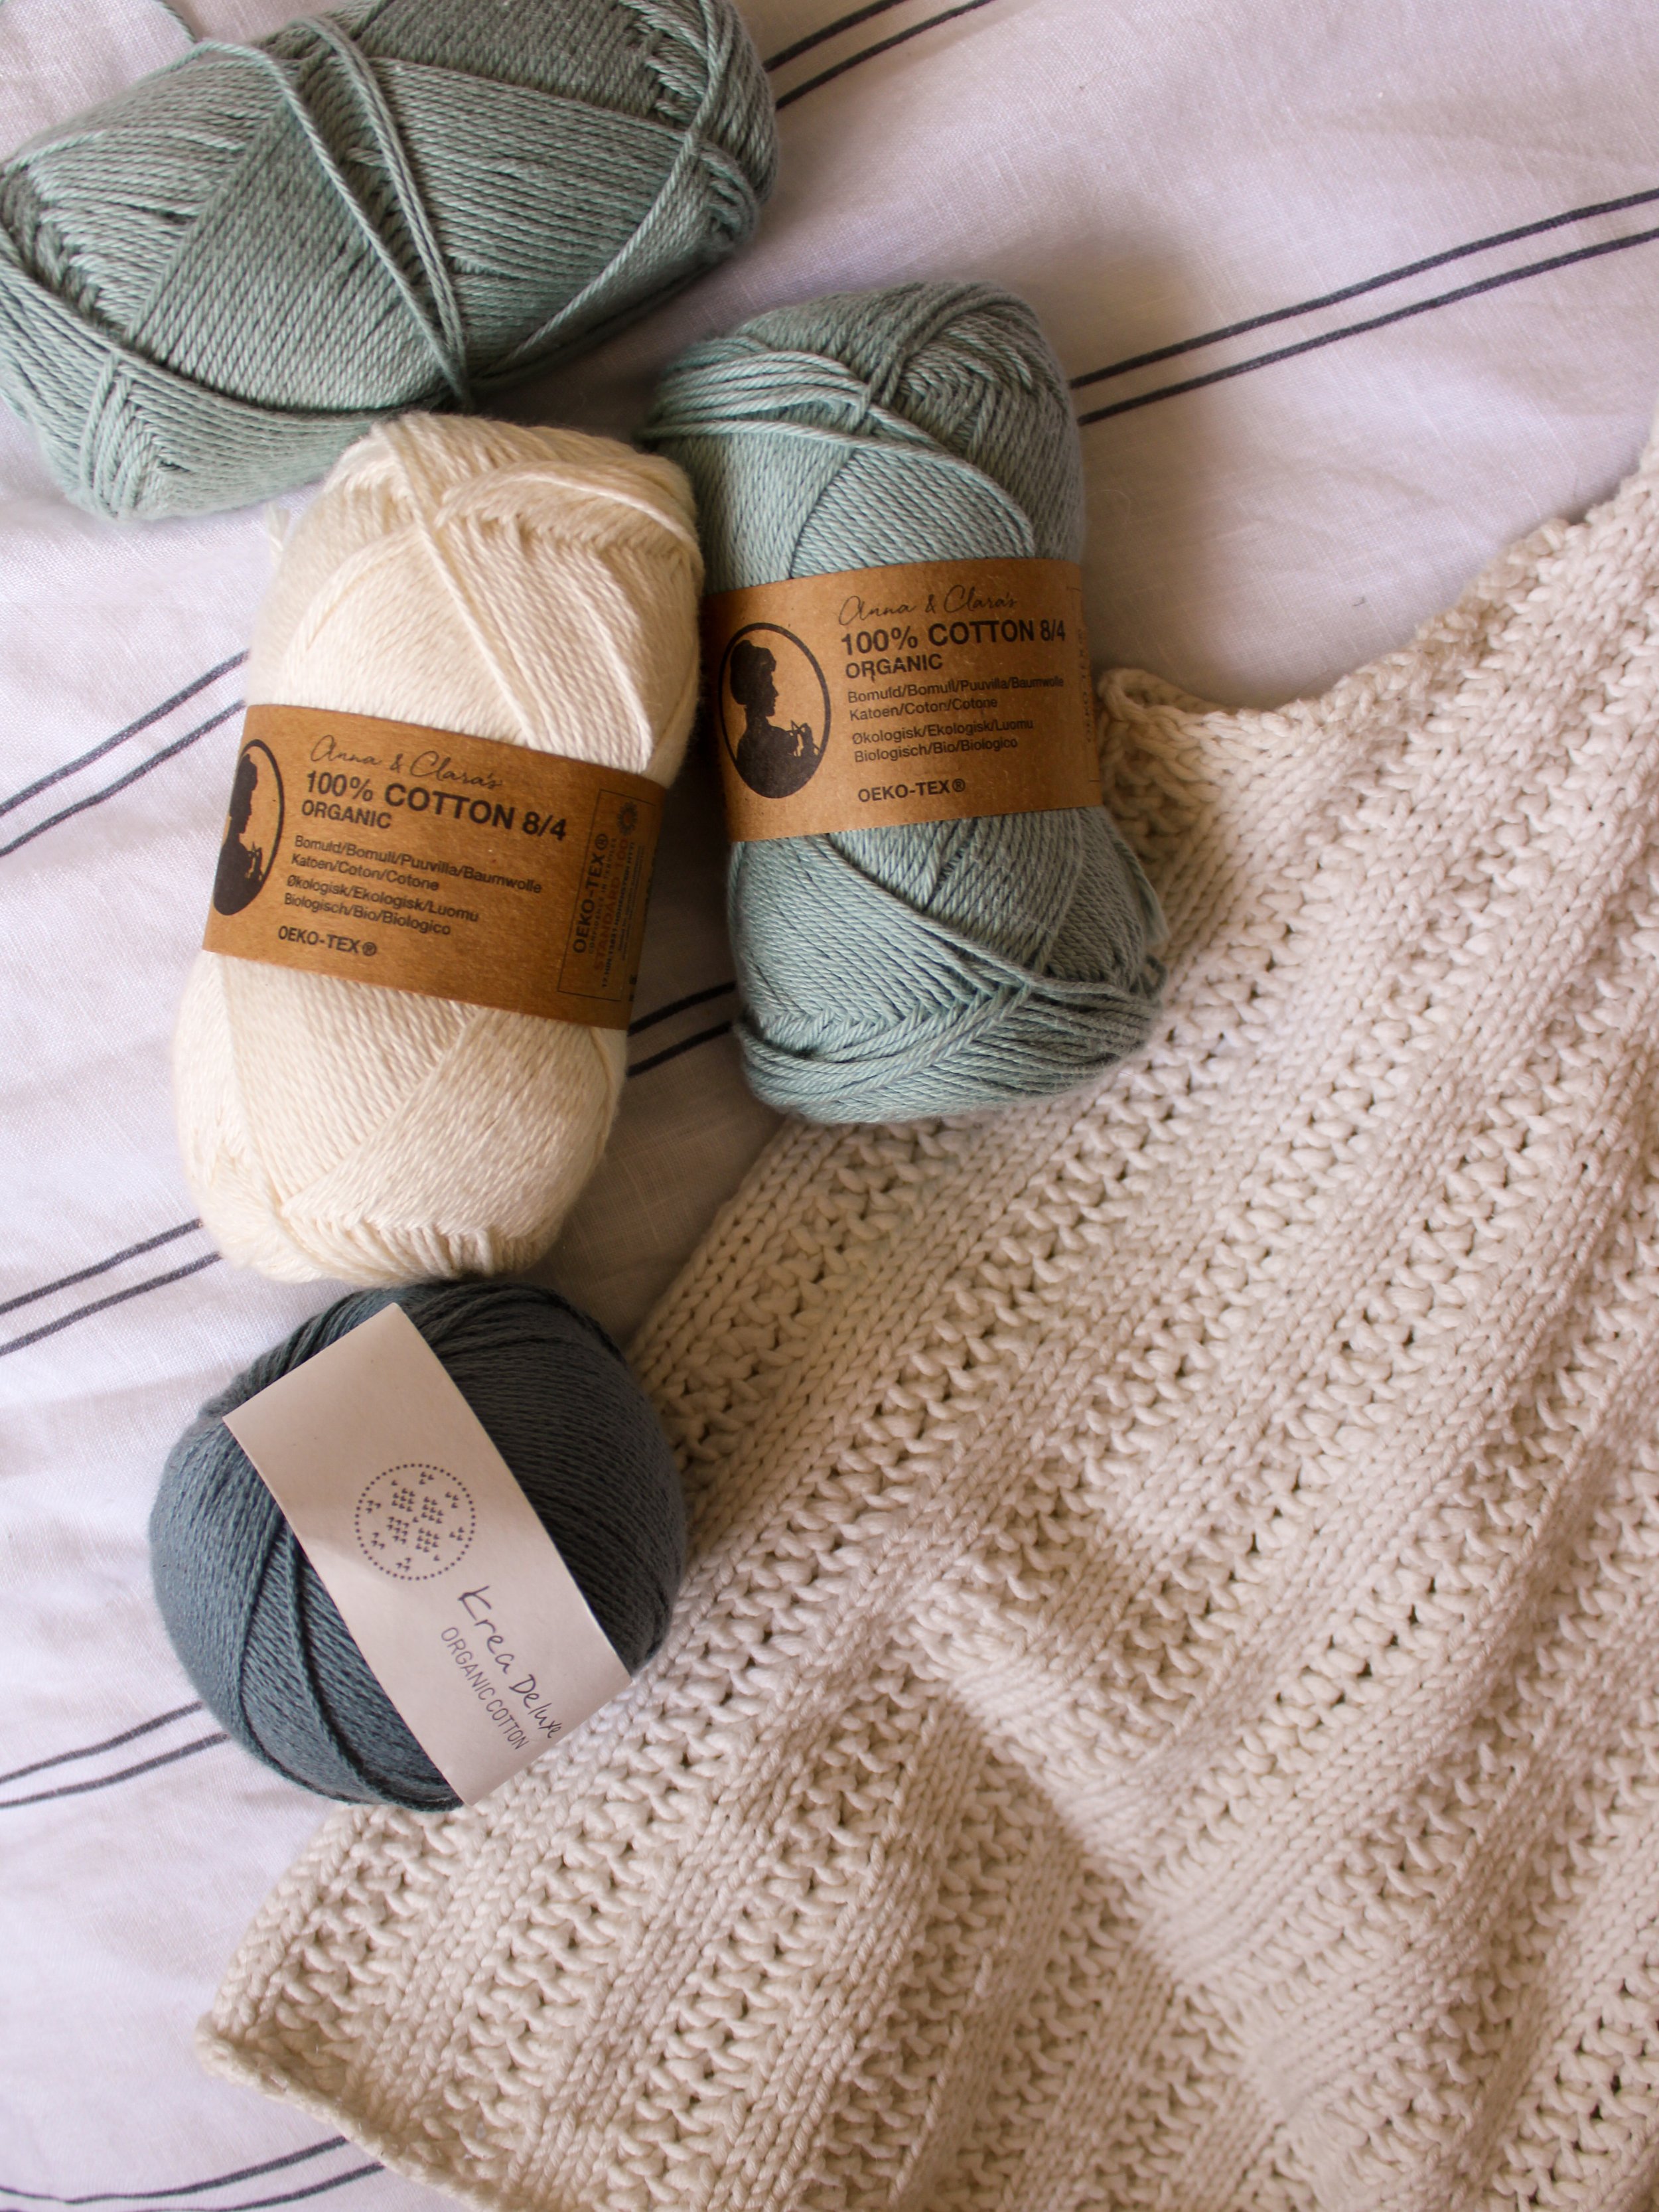 DROPS Cotton Merino - A superwash yarn for all seasons!